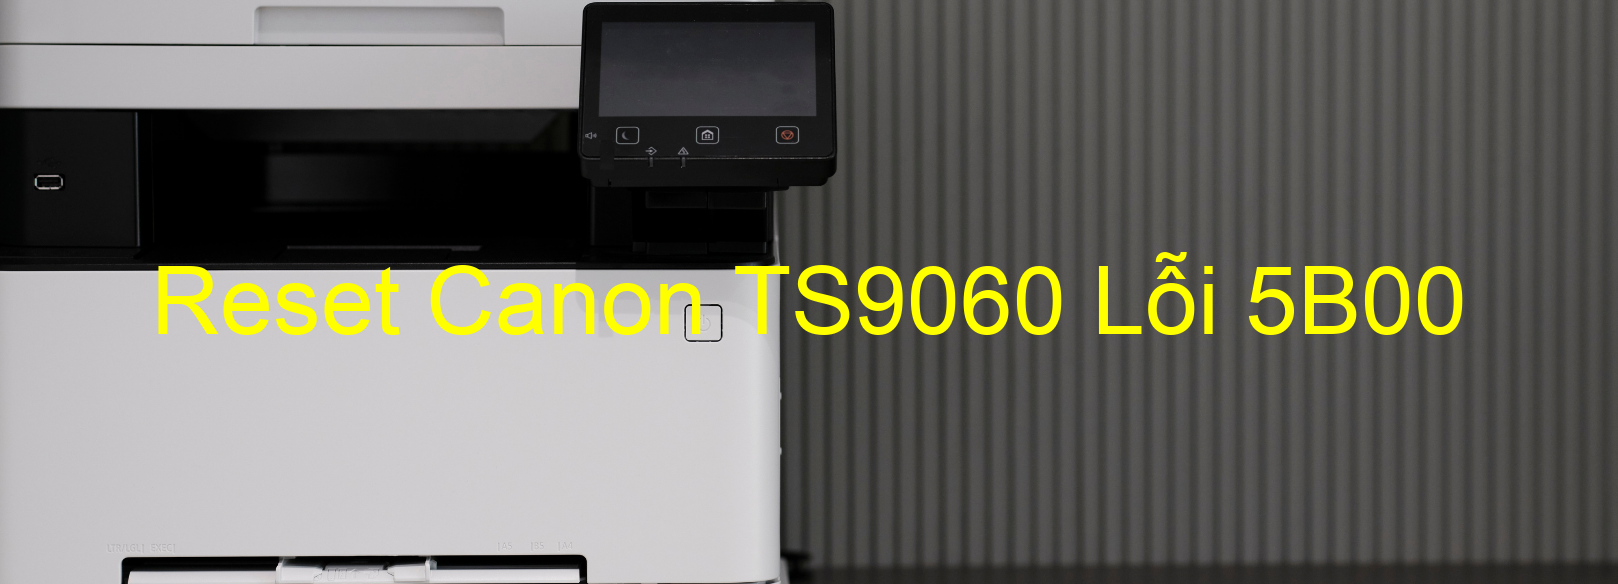 Reset Canon TS9060 Lỗi 5B00